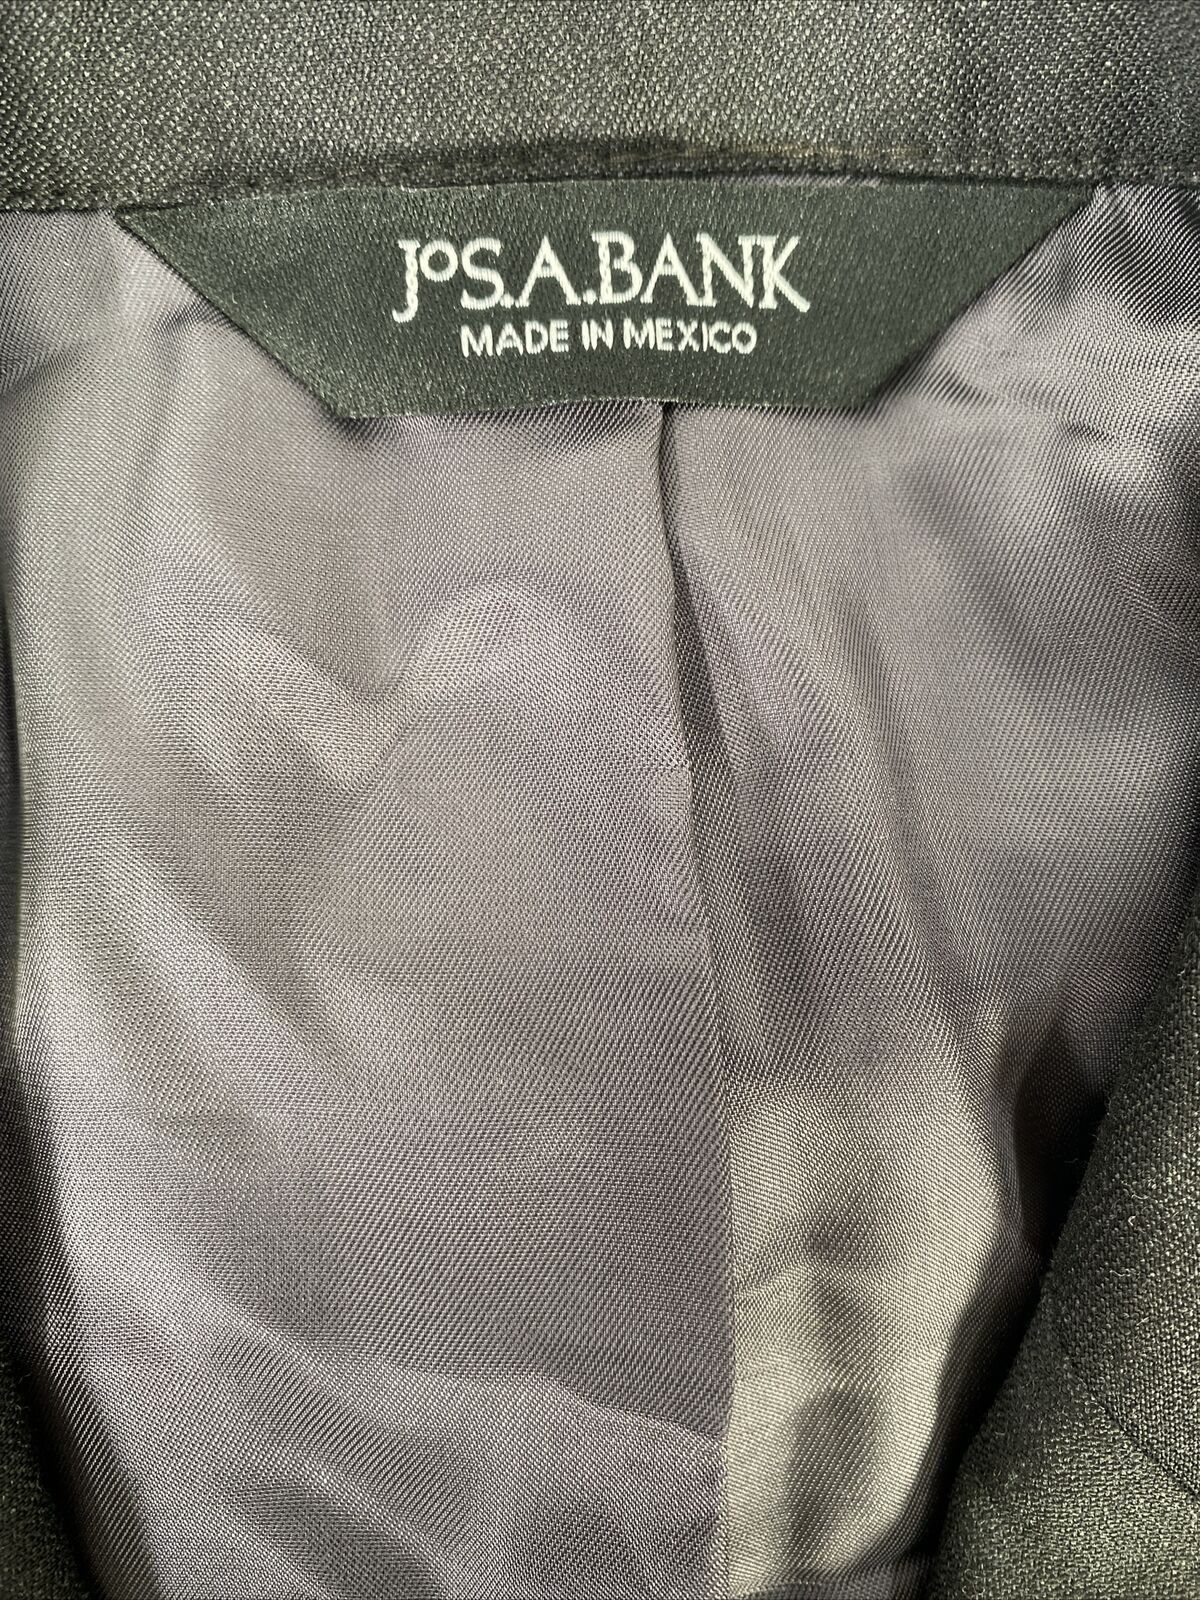 Jos A Bank Men's Black Wool Button Up Blazer Jacket - 46